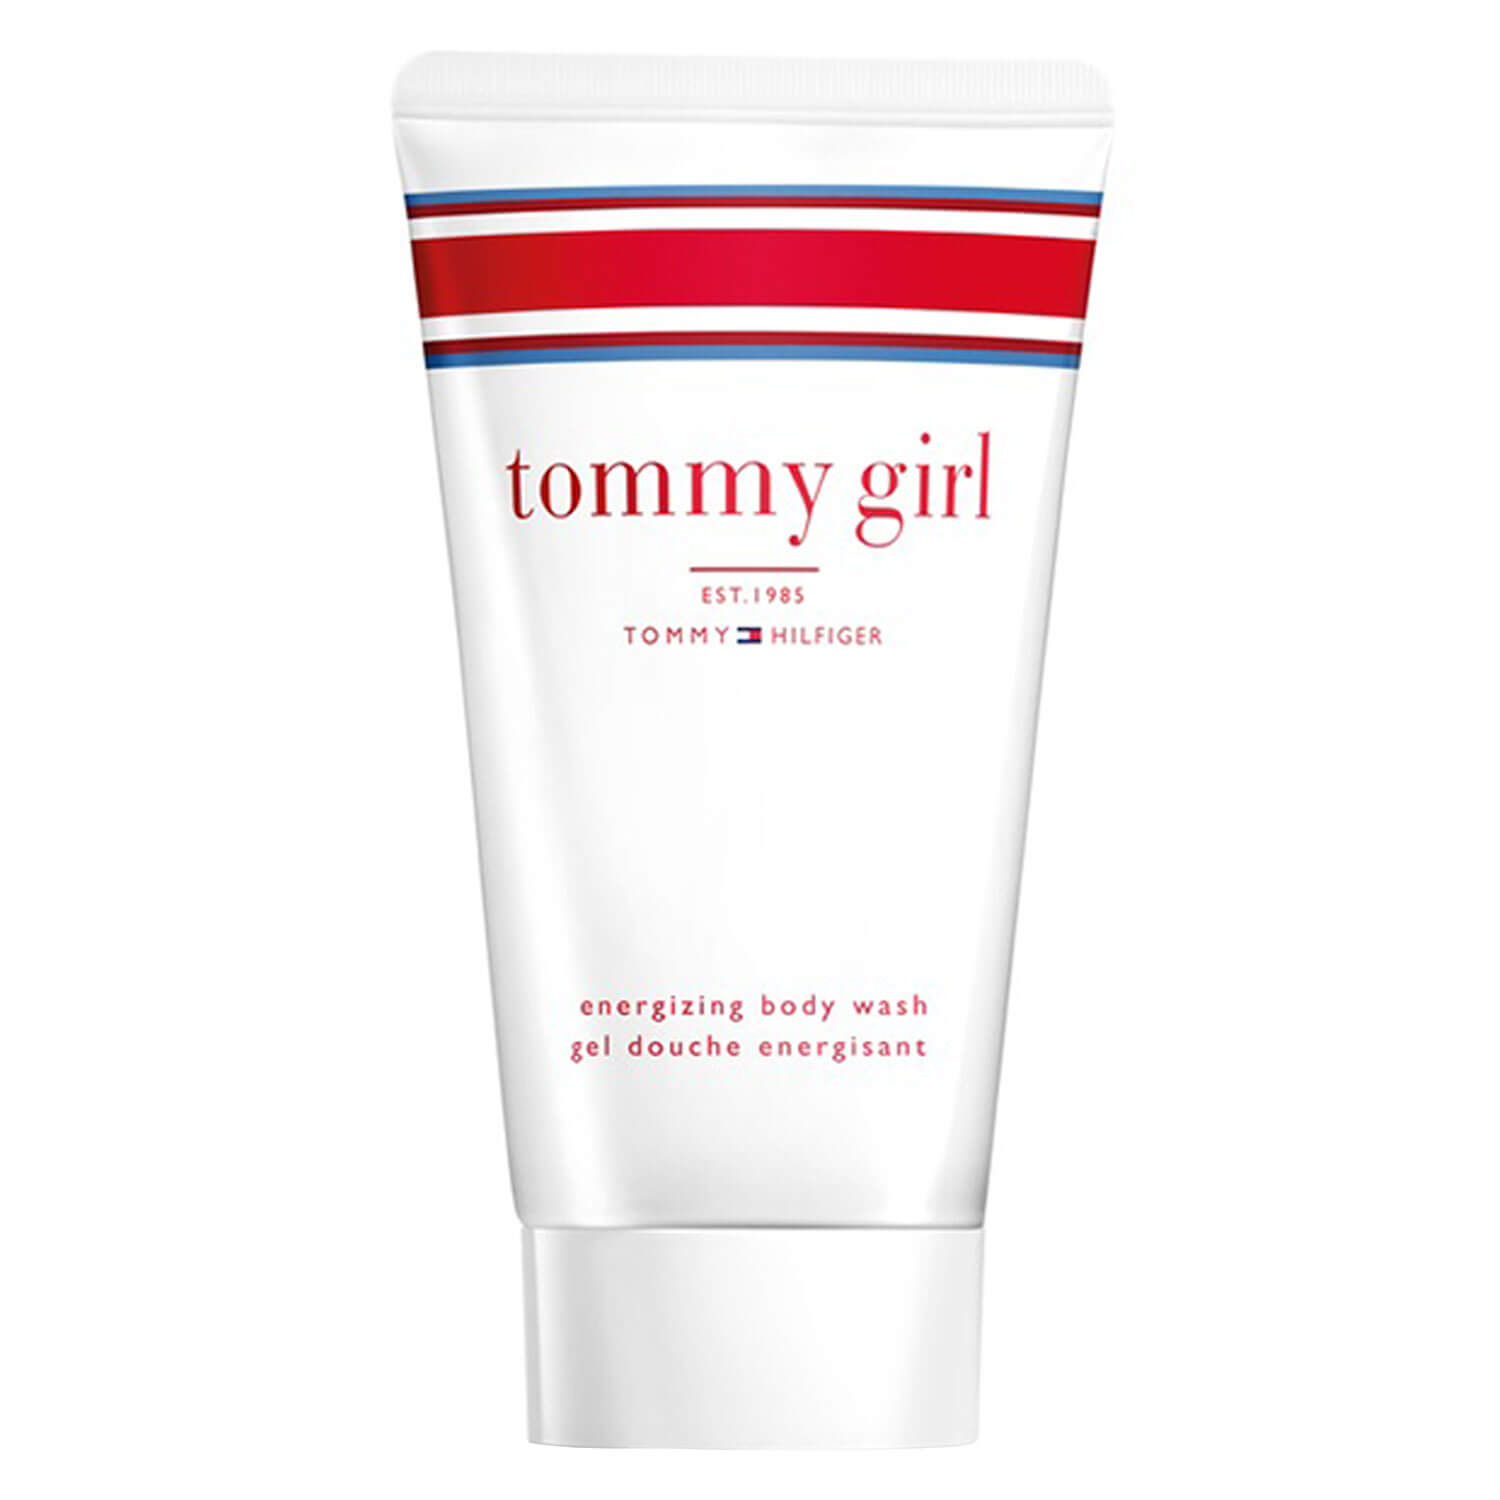 tommy girl energizing body wash